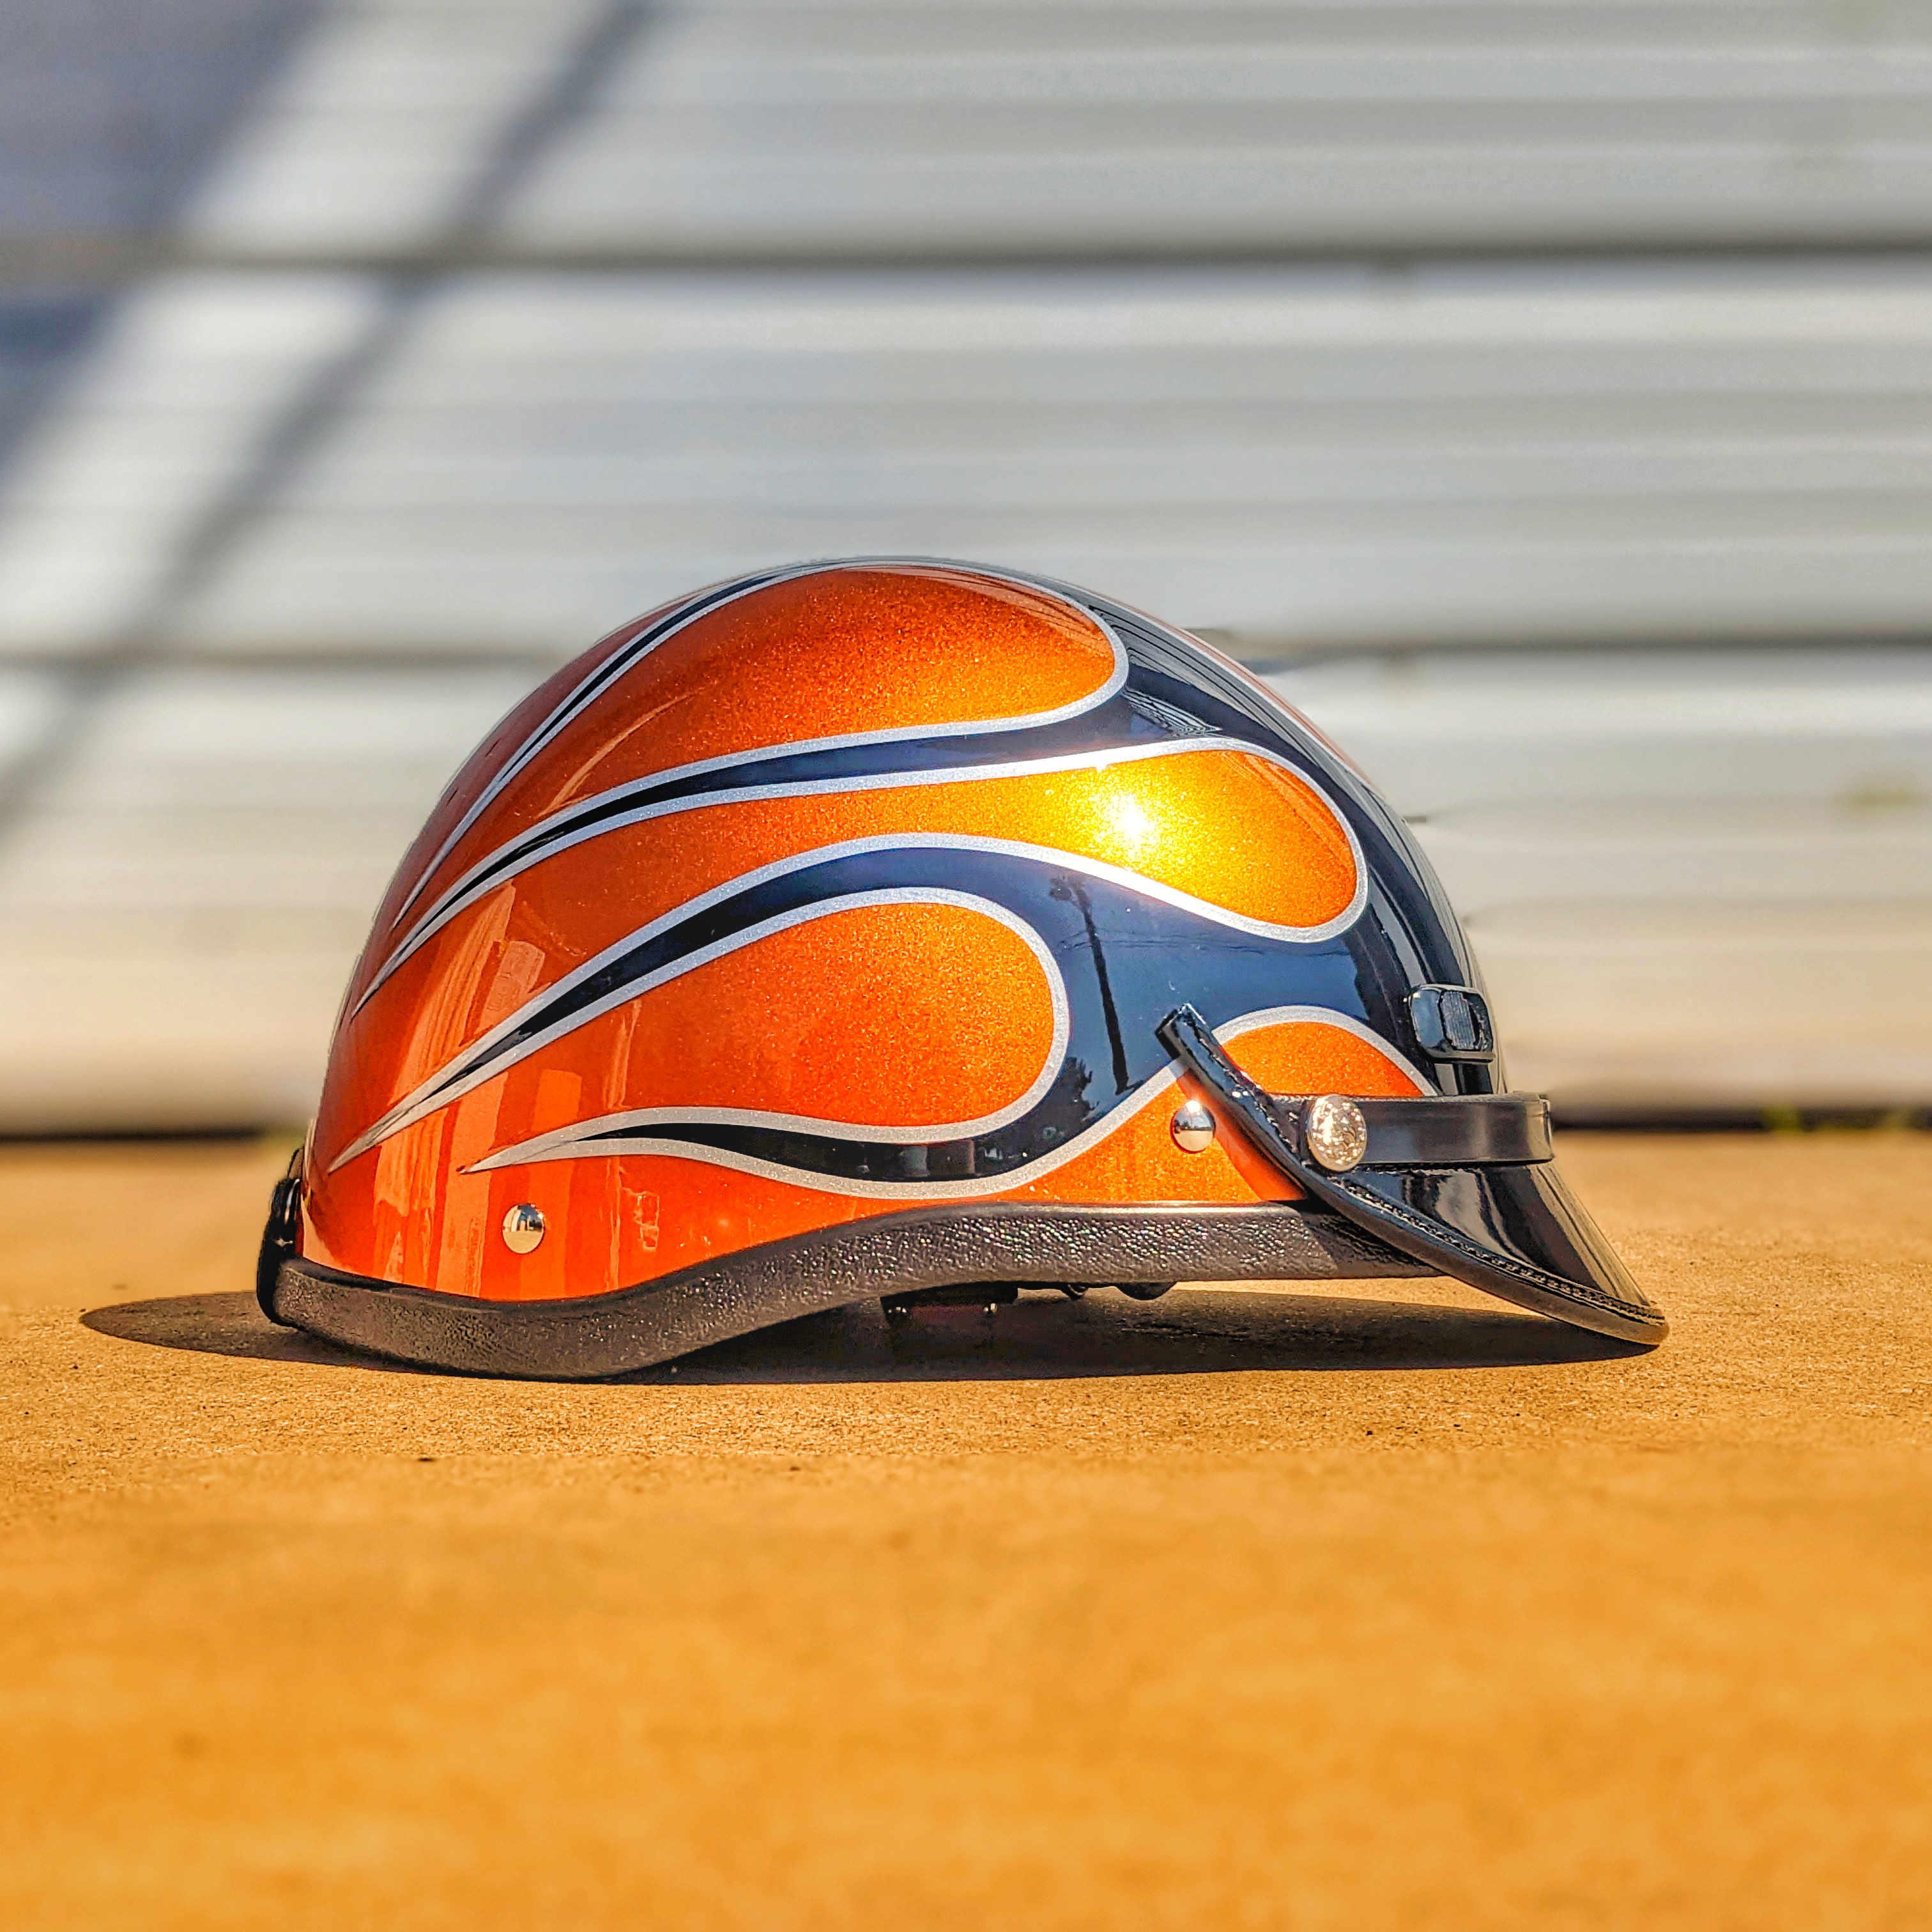 Super Seer Motorcycle Helmet painted Harley-Davidson Scorched Orange with Vivid Black Flames